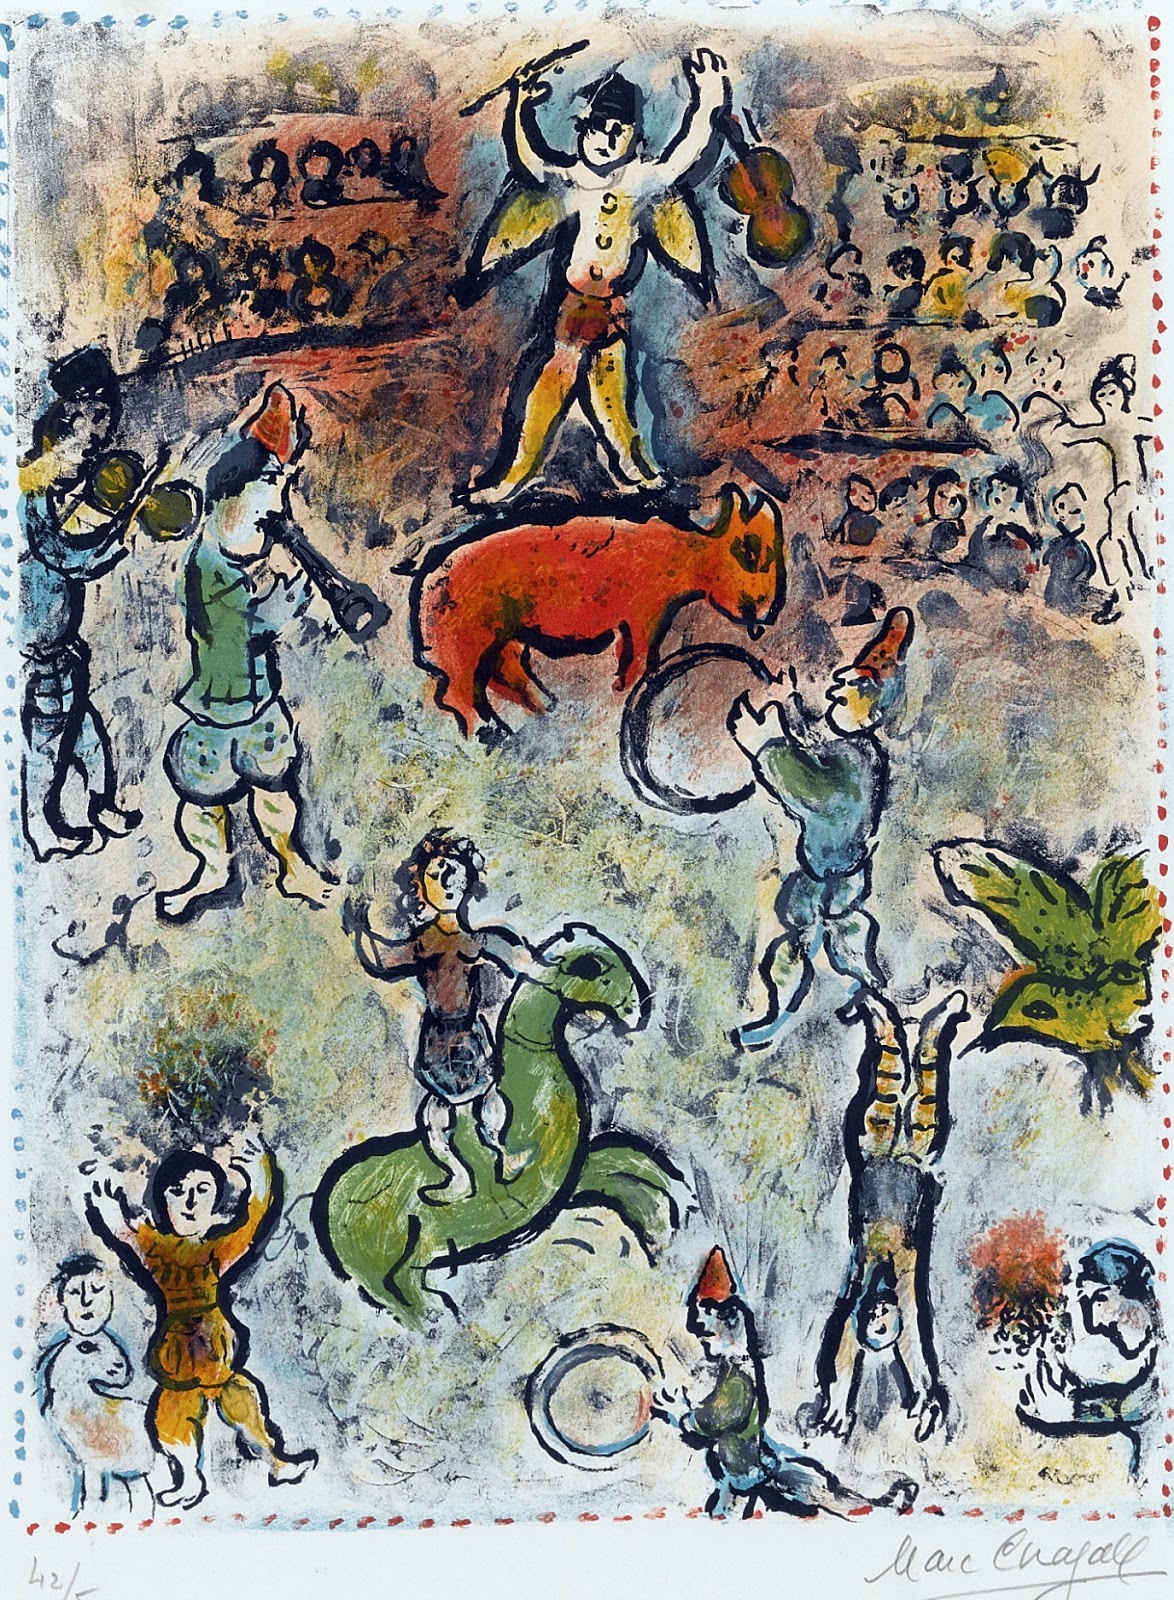 Marc+Chagall-1887-1985 (225).jpg